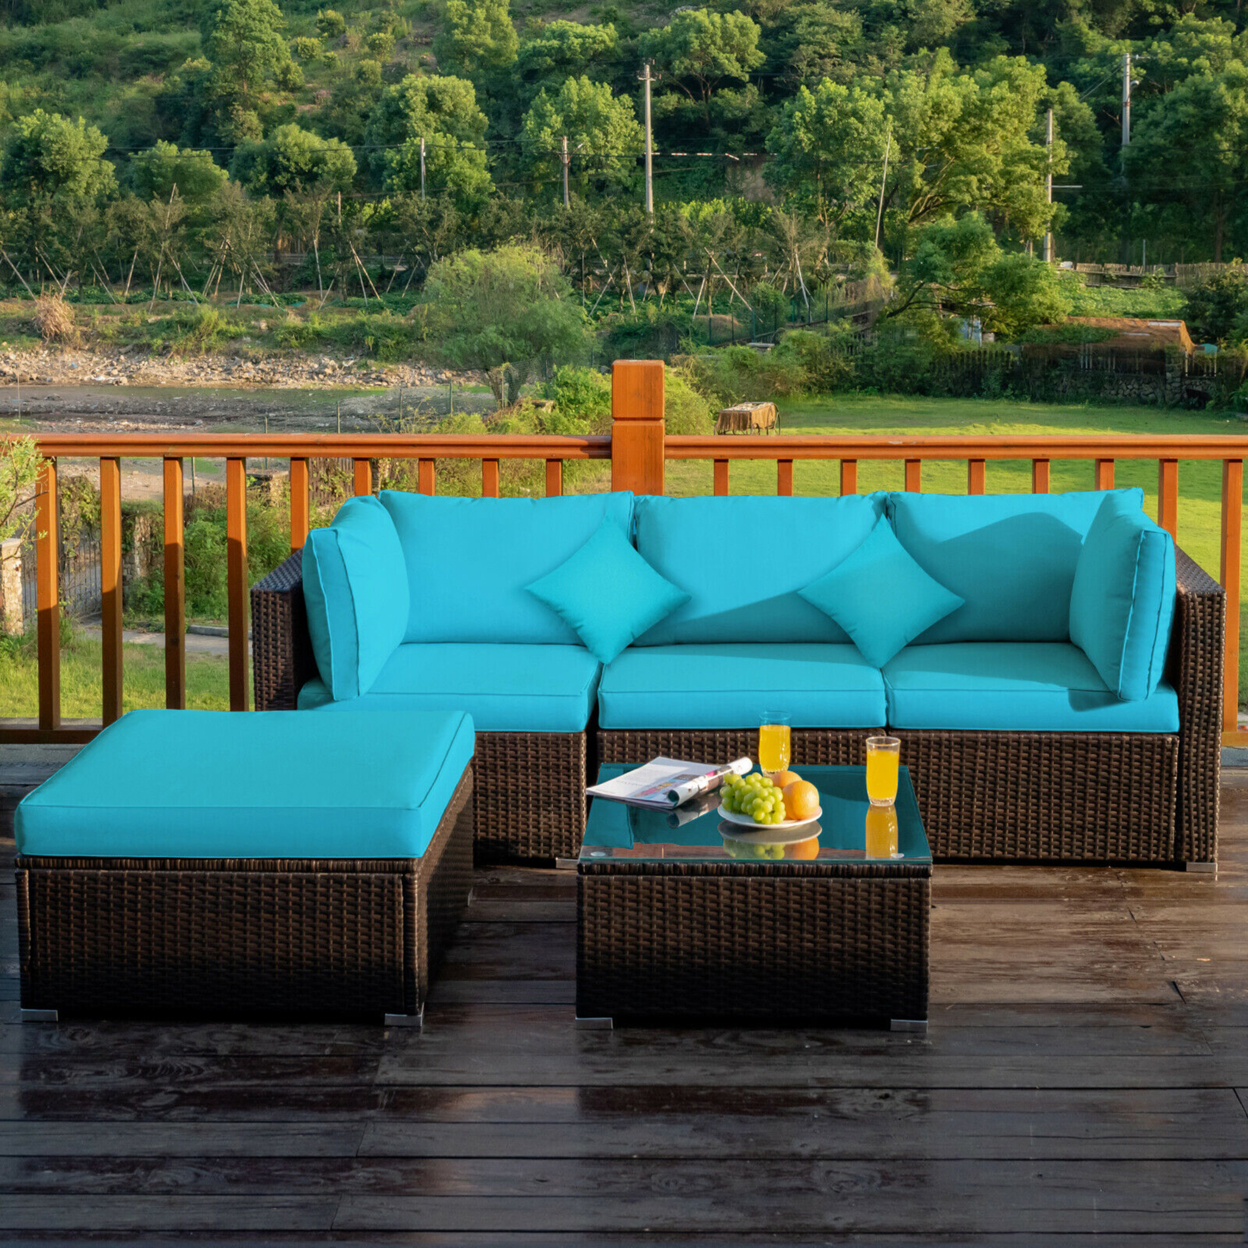 5PCS Rattan Patio Conversation Set Outdoor Furniture Set W/ Ottoman Turquoise Cushion